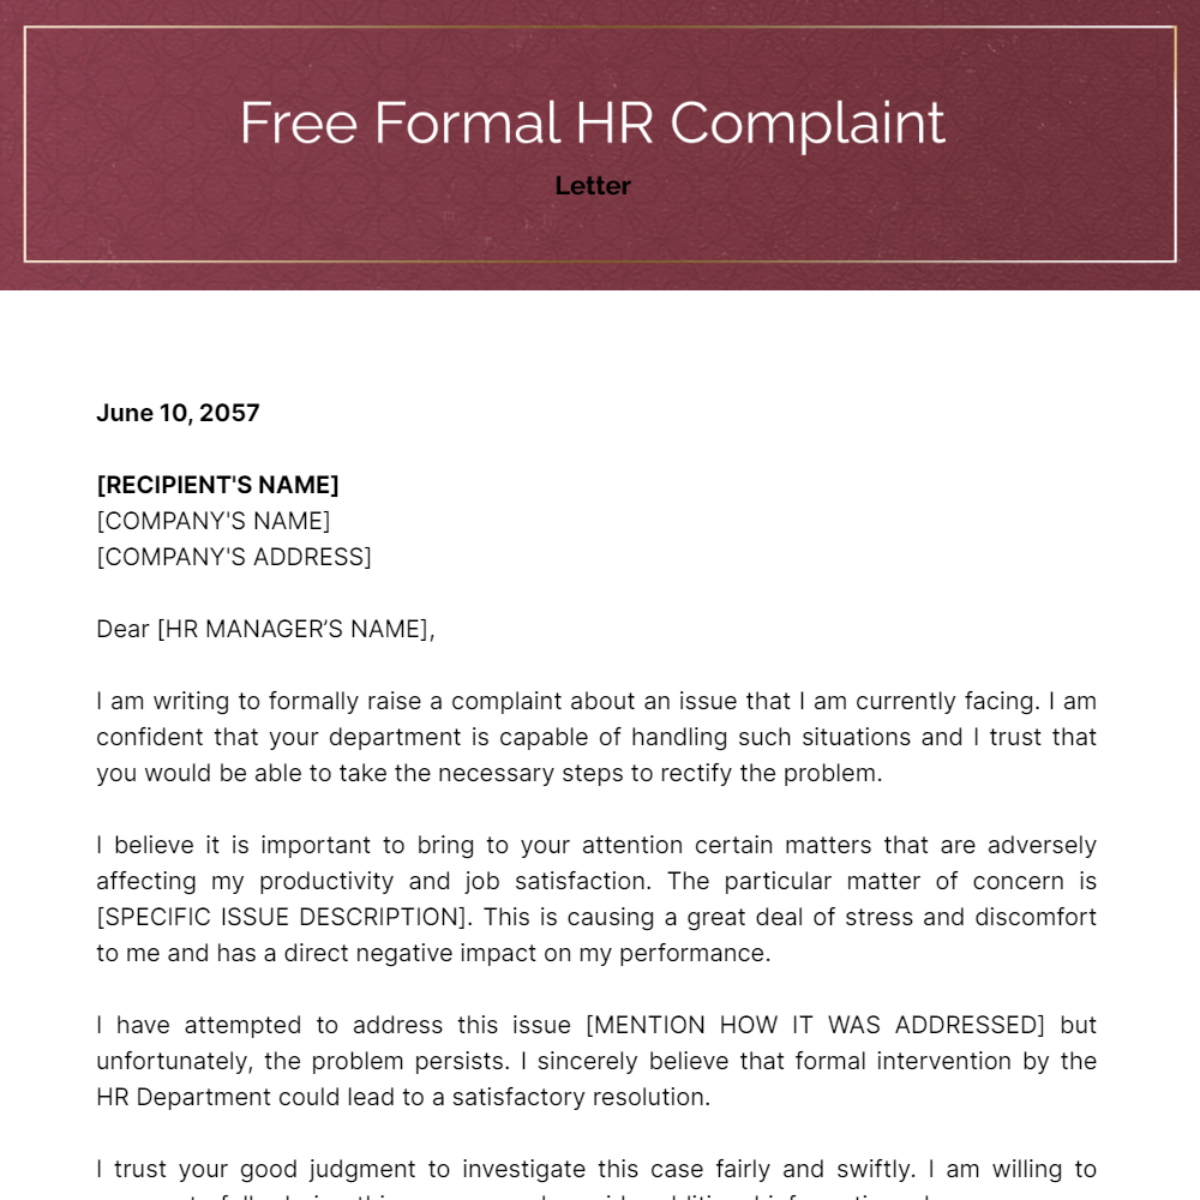 Formal HR Complaint Letter Template